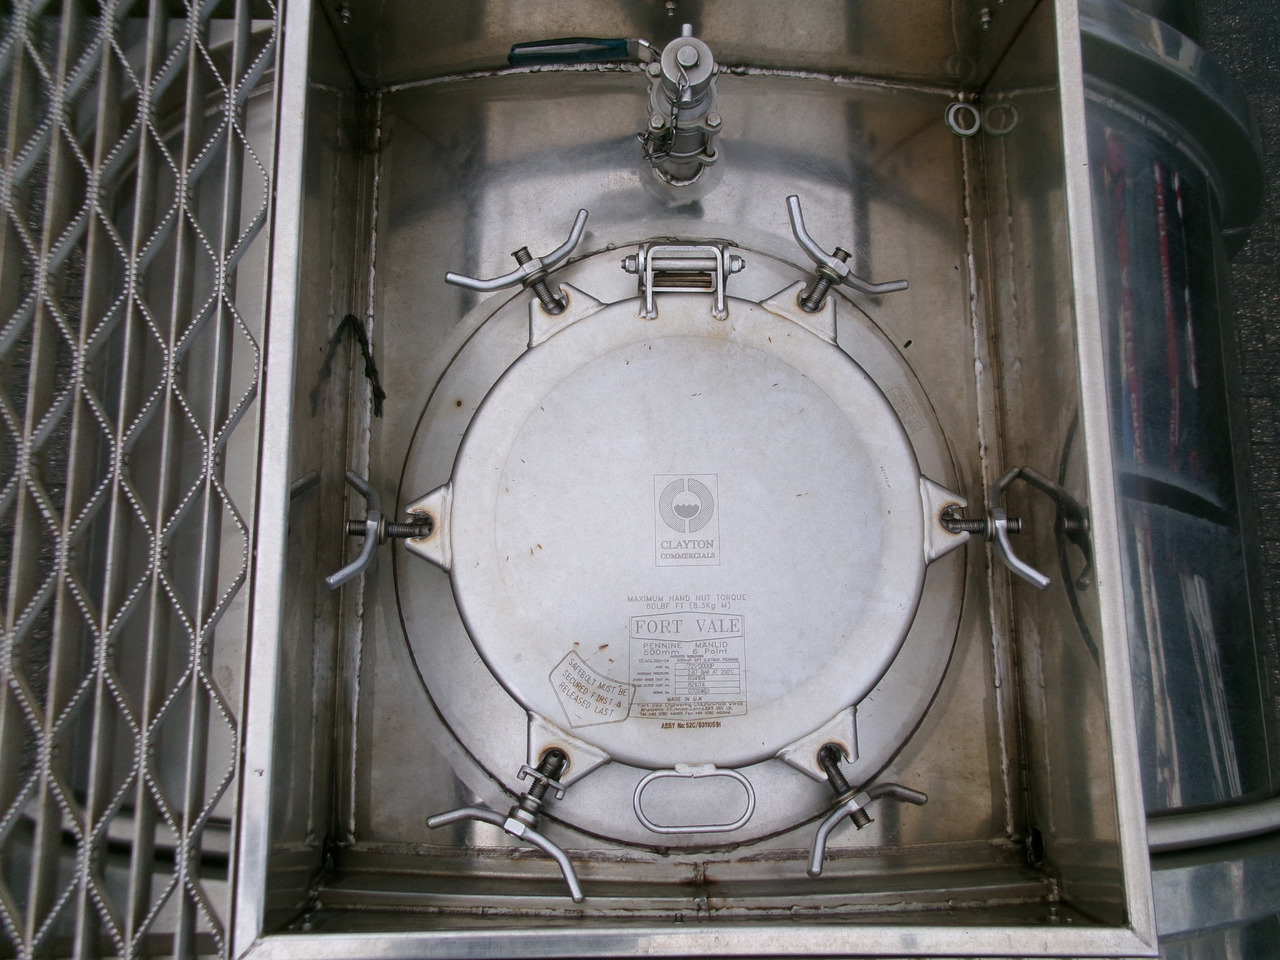 Cisterna semirremolque para transporte de substancias químicas Clayton Chemical tank inox 37.5 m3 / 1 comp: foto 17